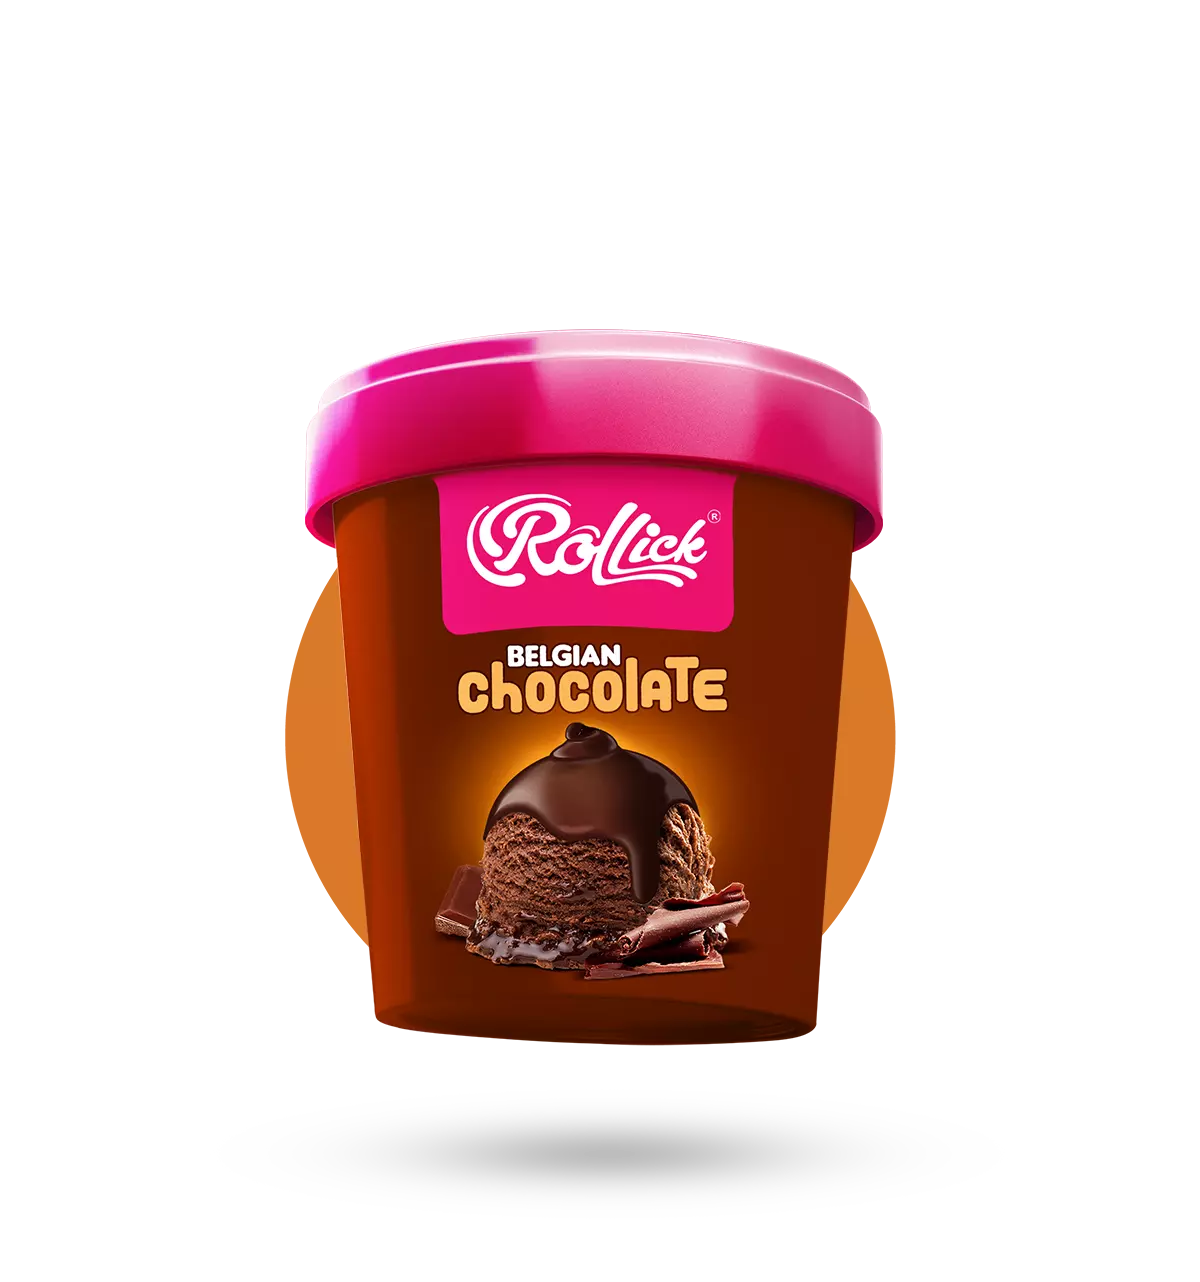 Creamy Cups – Rollick Ice Cream Cups